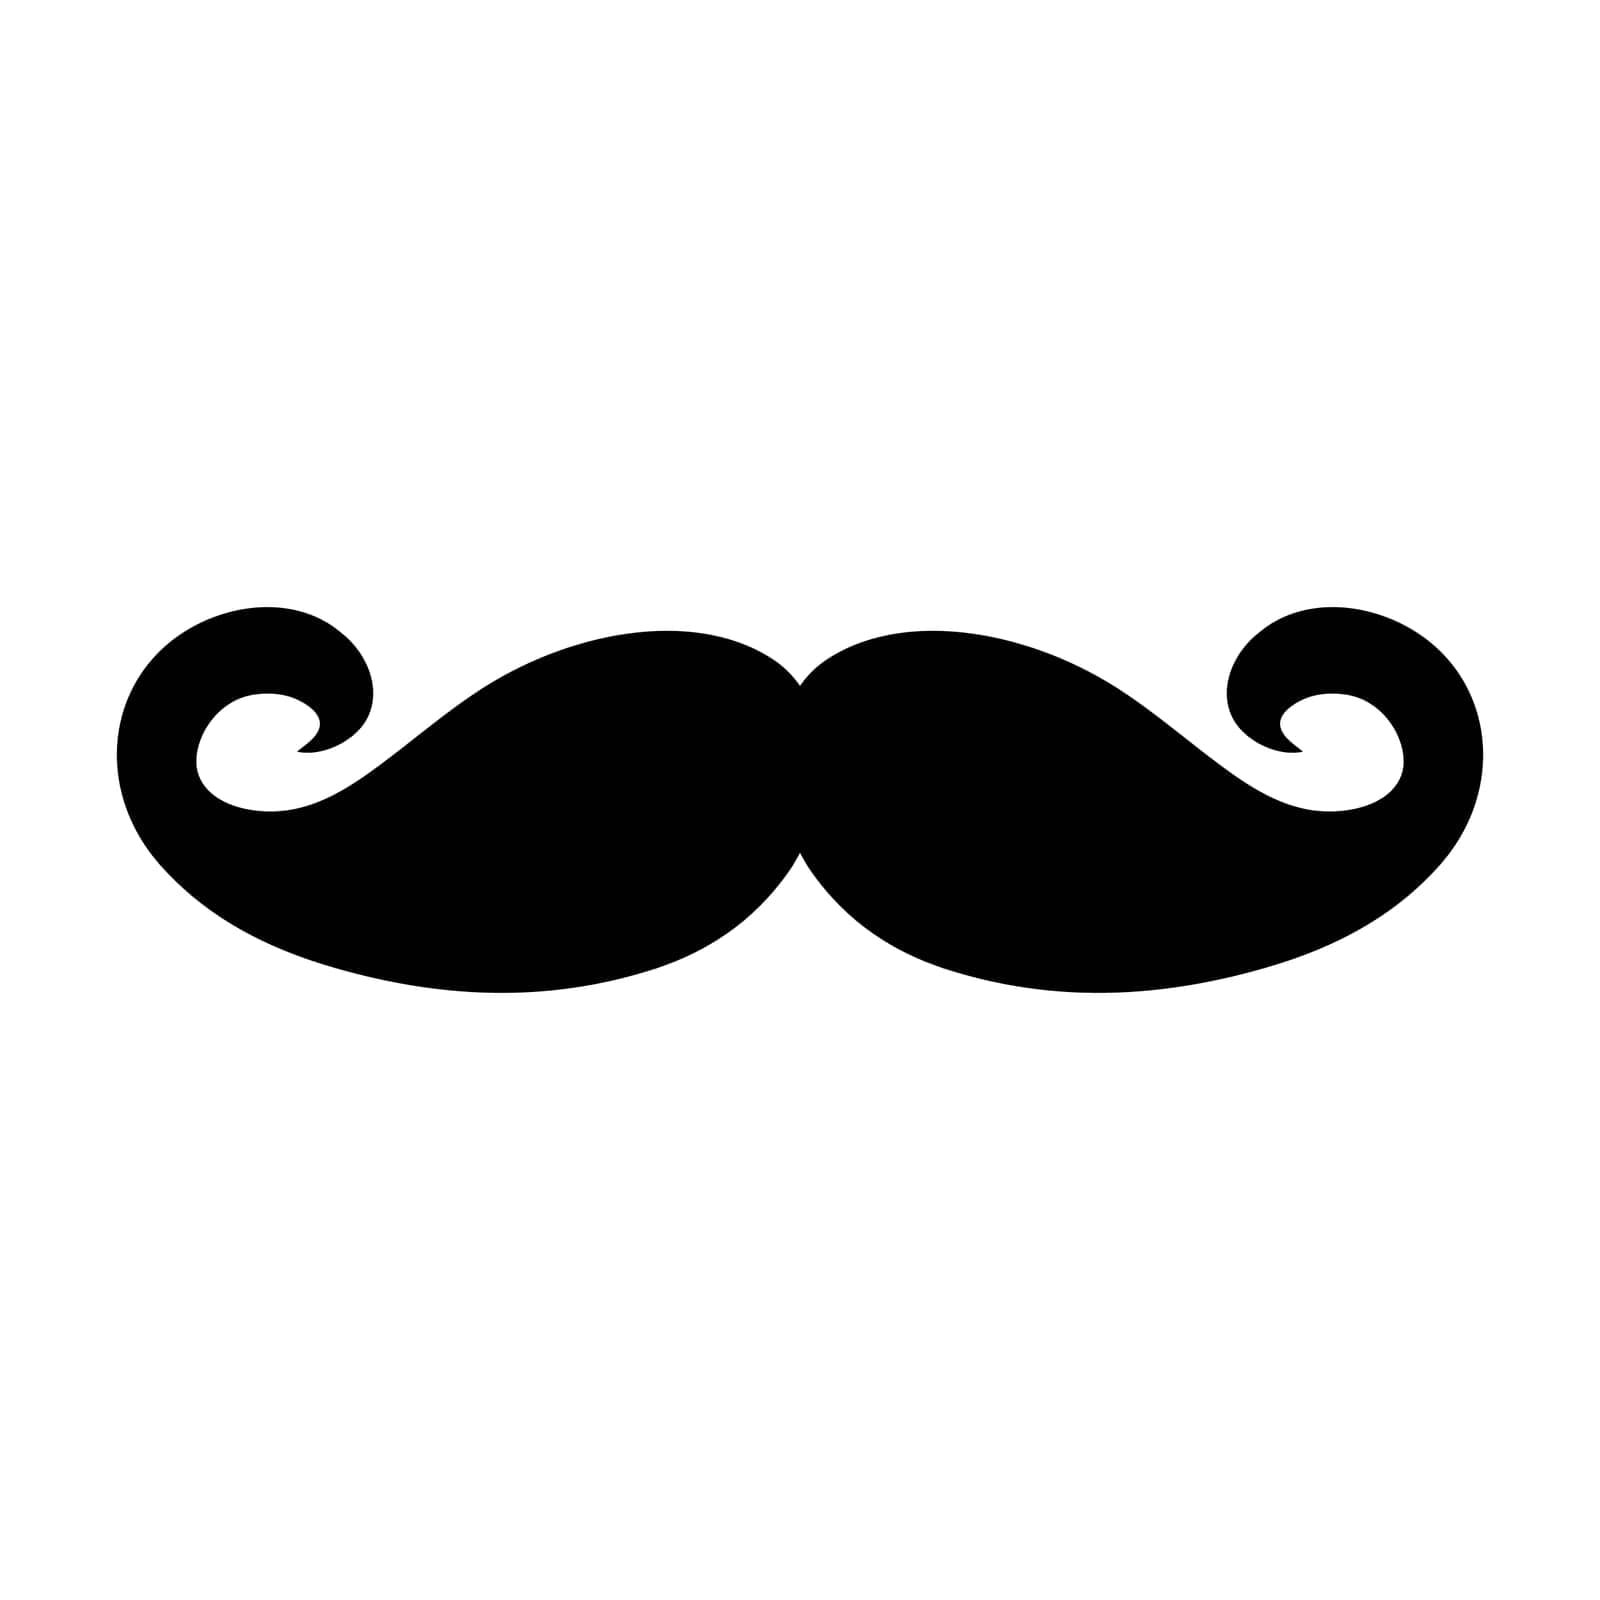 Moustache icon. Moustache silhouette. Isolated moustache symbol. Vector illustration.